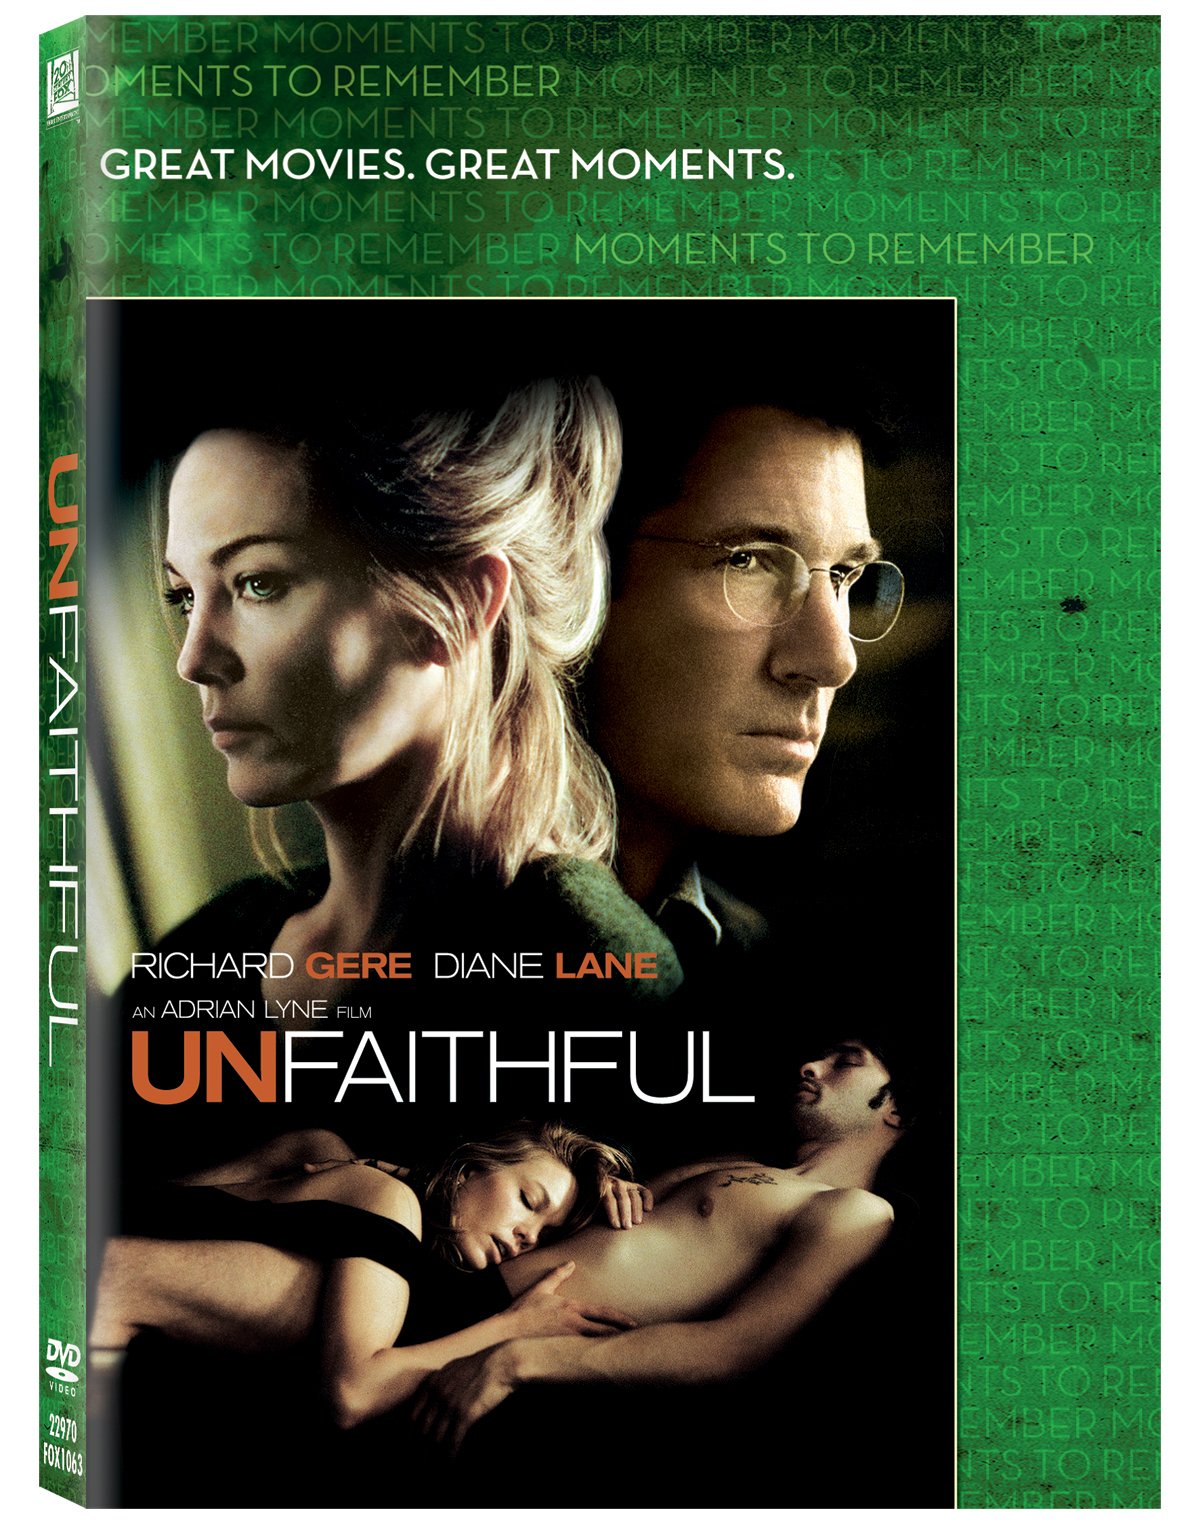 unfaithful-movie-purchase-or-watch-online